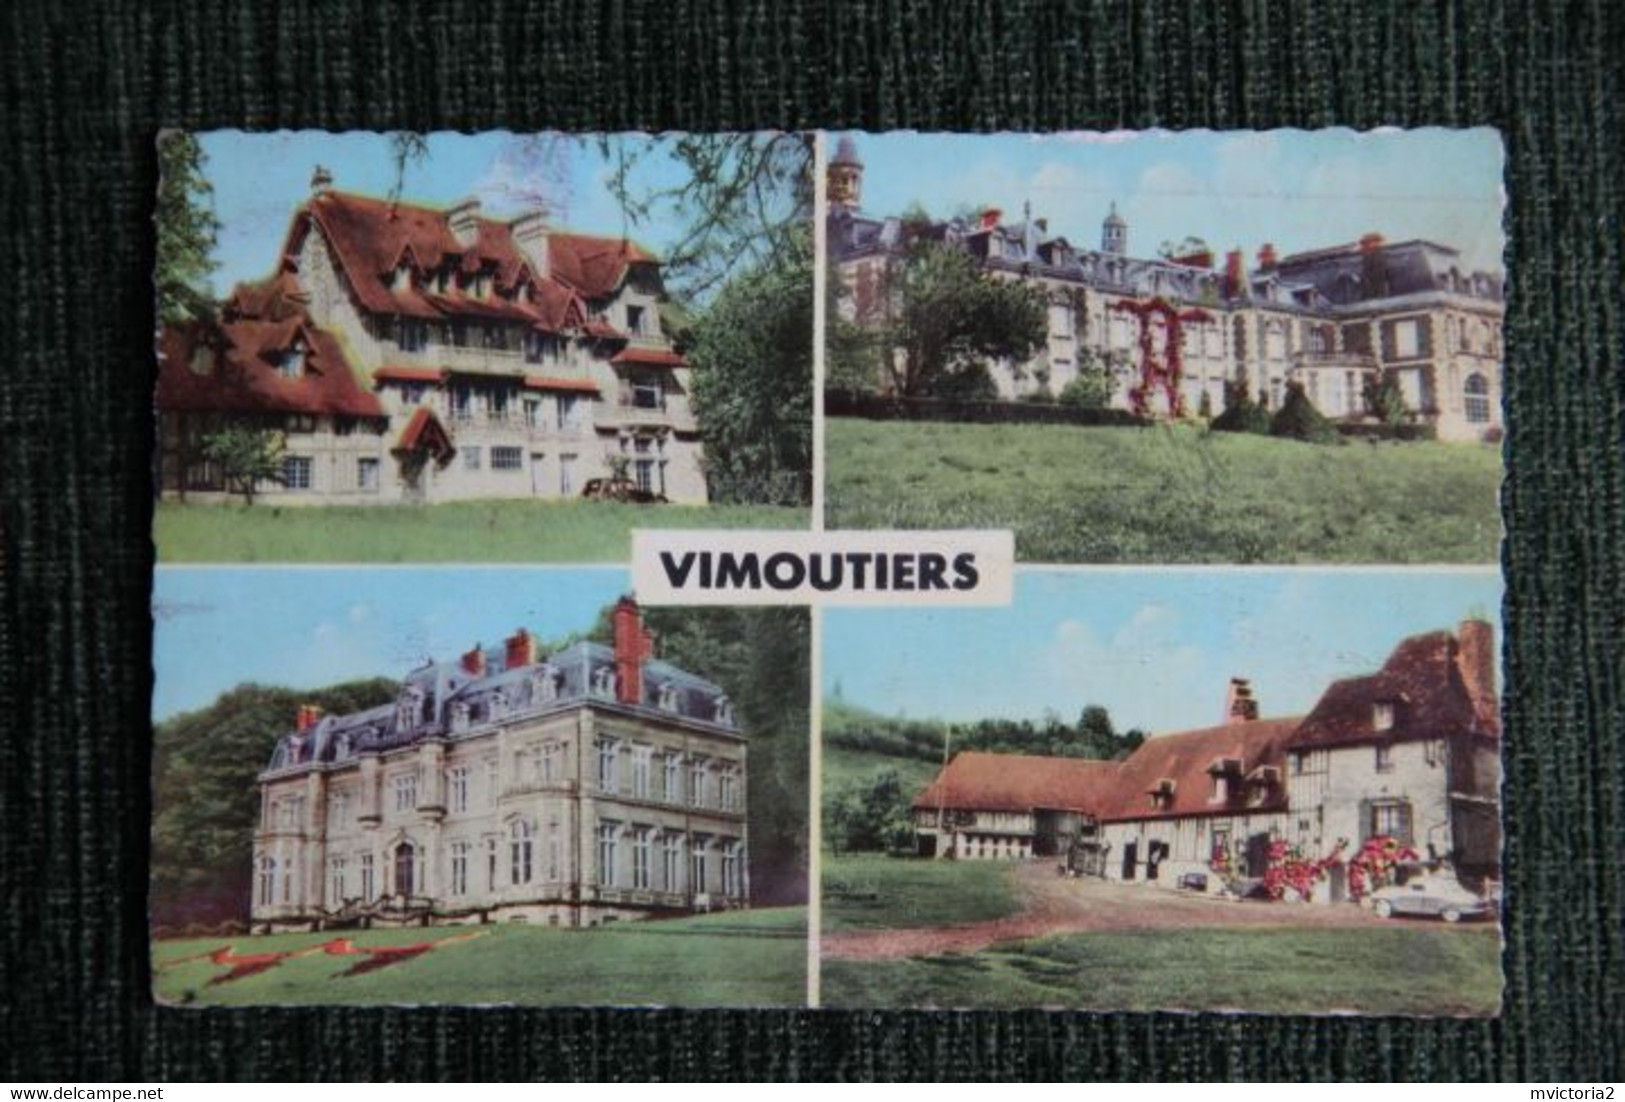 VIMOUTIERS - Vimoutiers